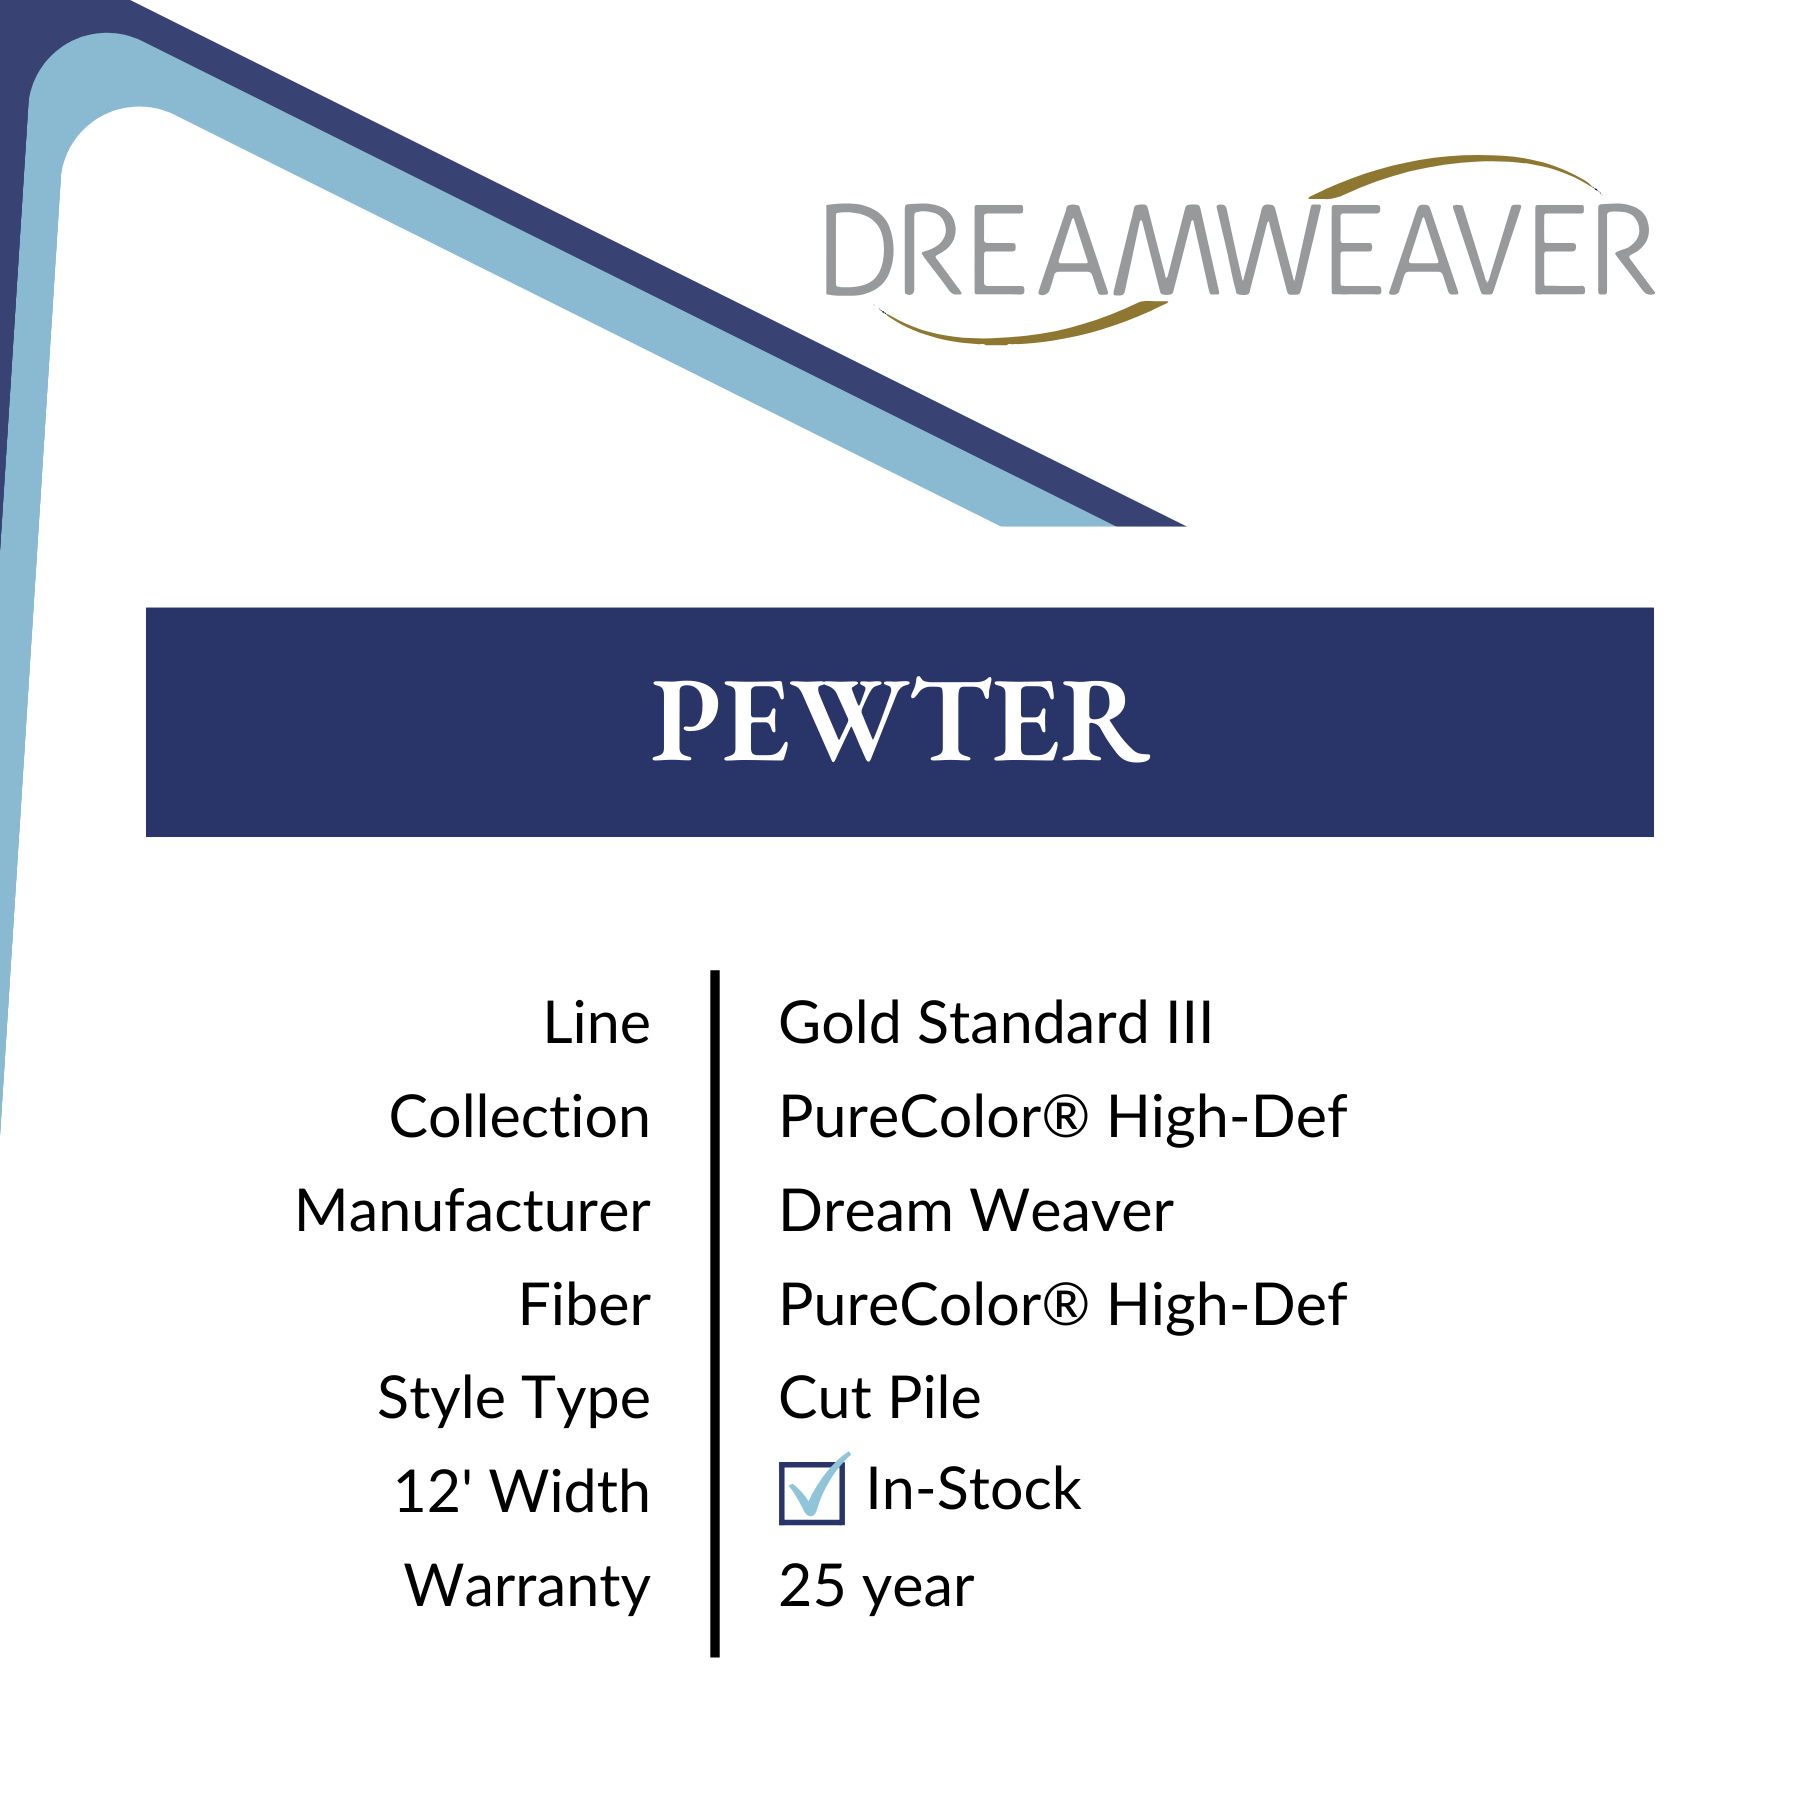 Pewter, Gold Standard III, Carpet by Dreamweaver, Calhoun's Flooring Springfield, IL Specs